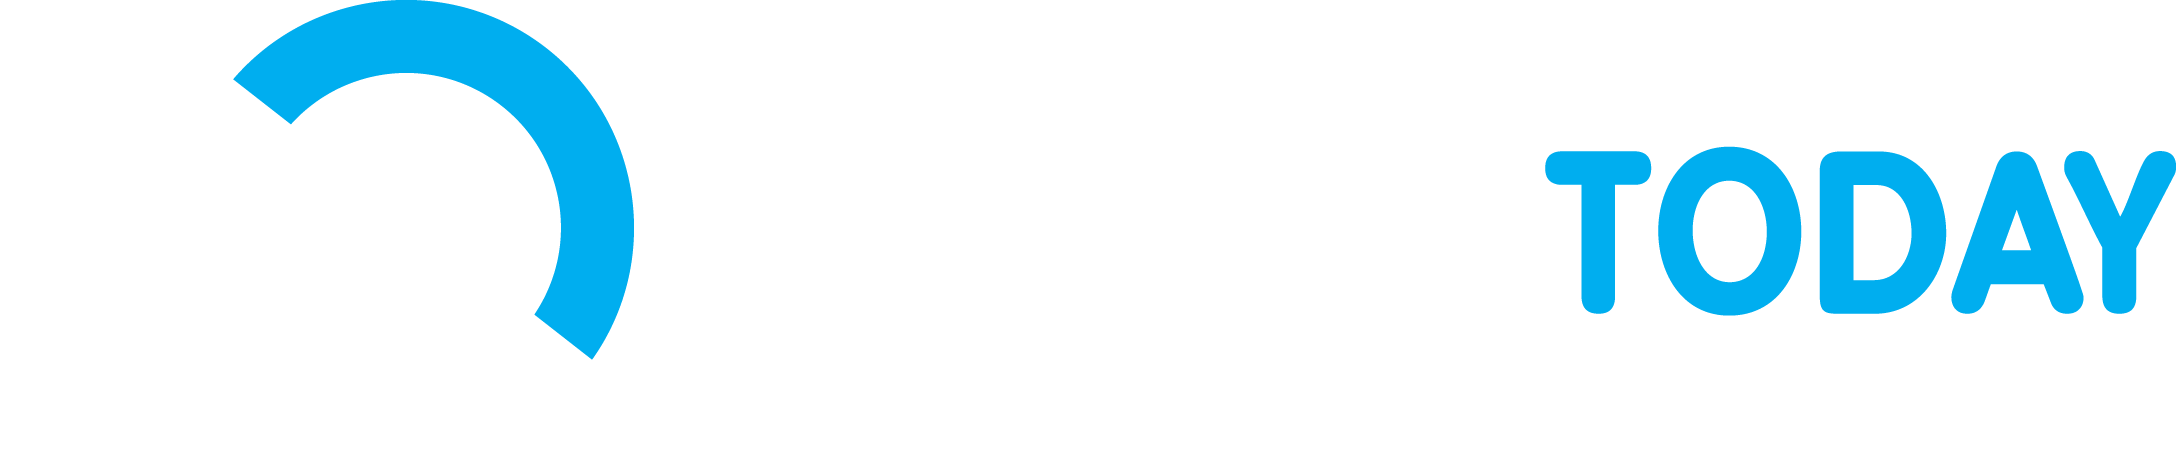 Technotoday-mobile-logo